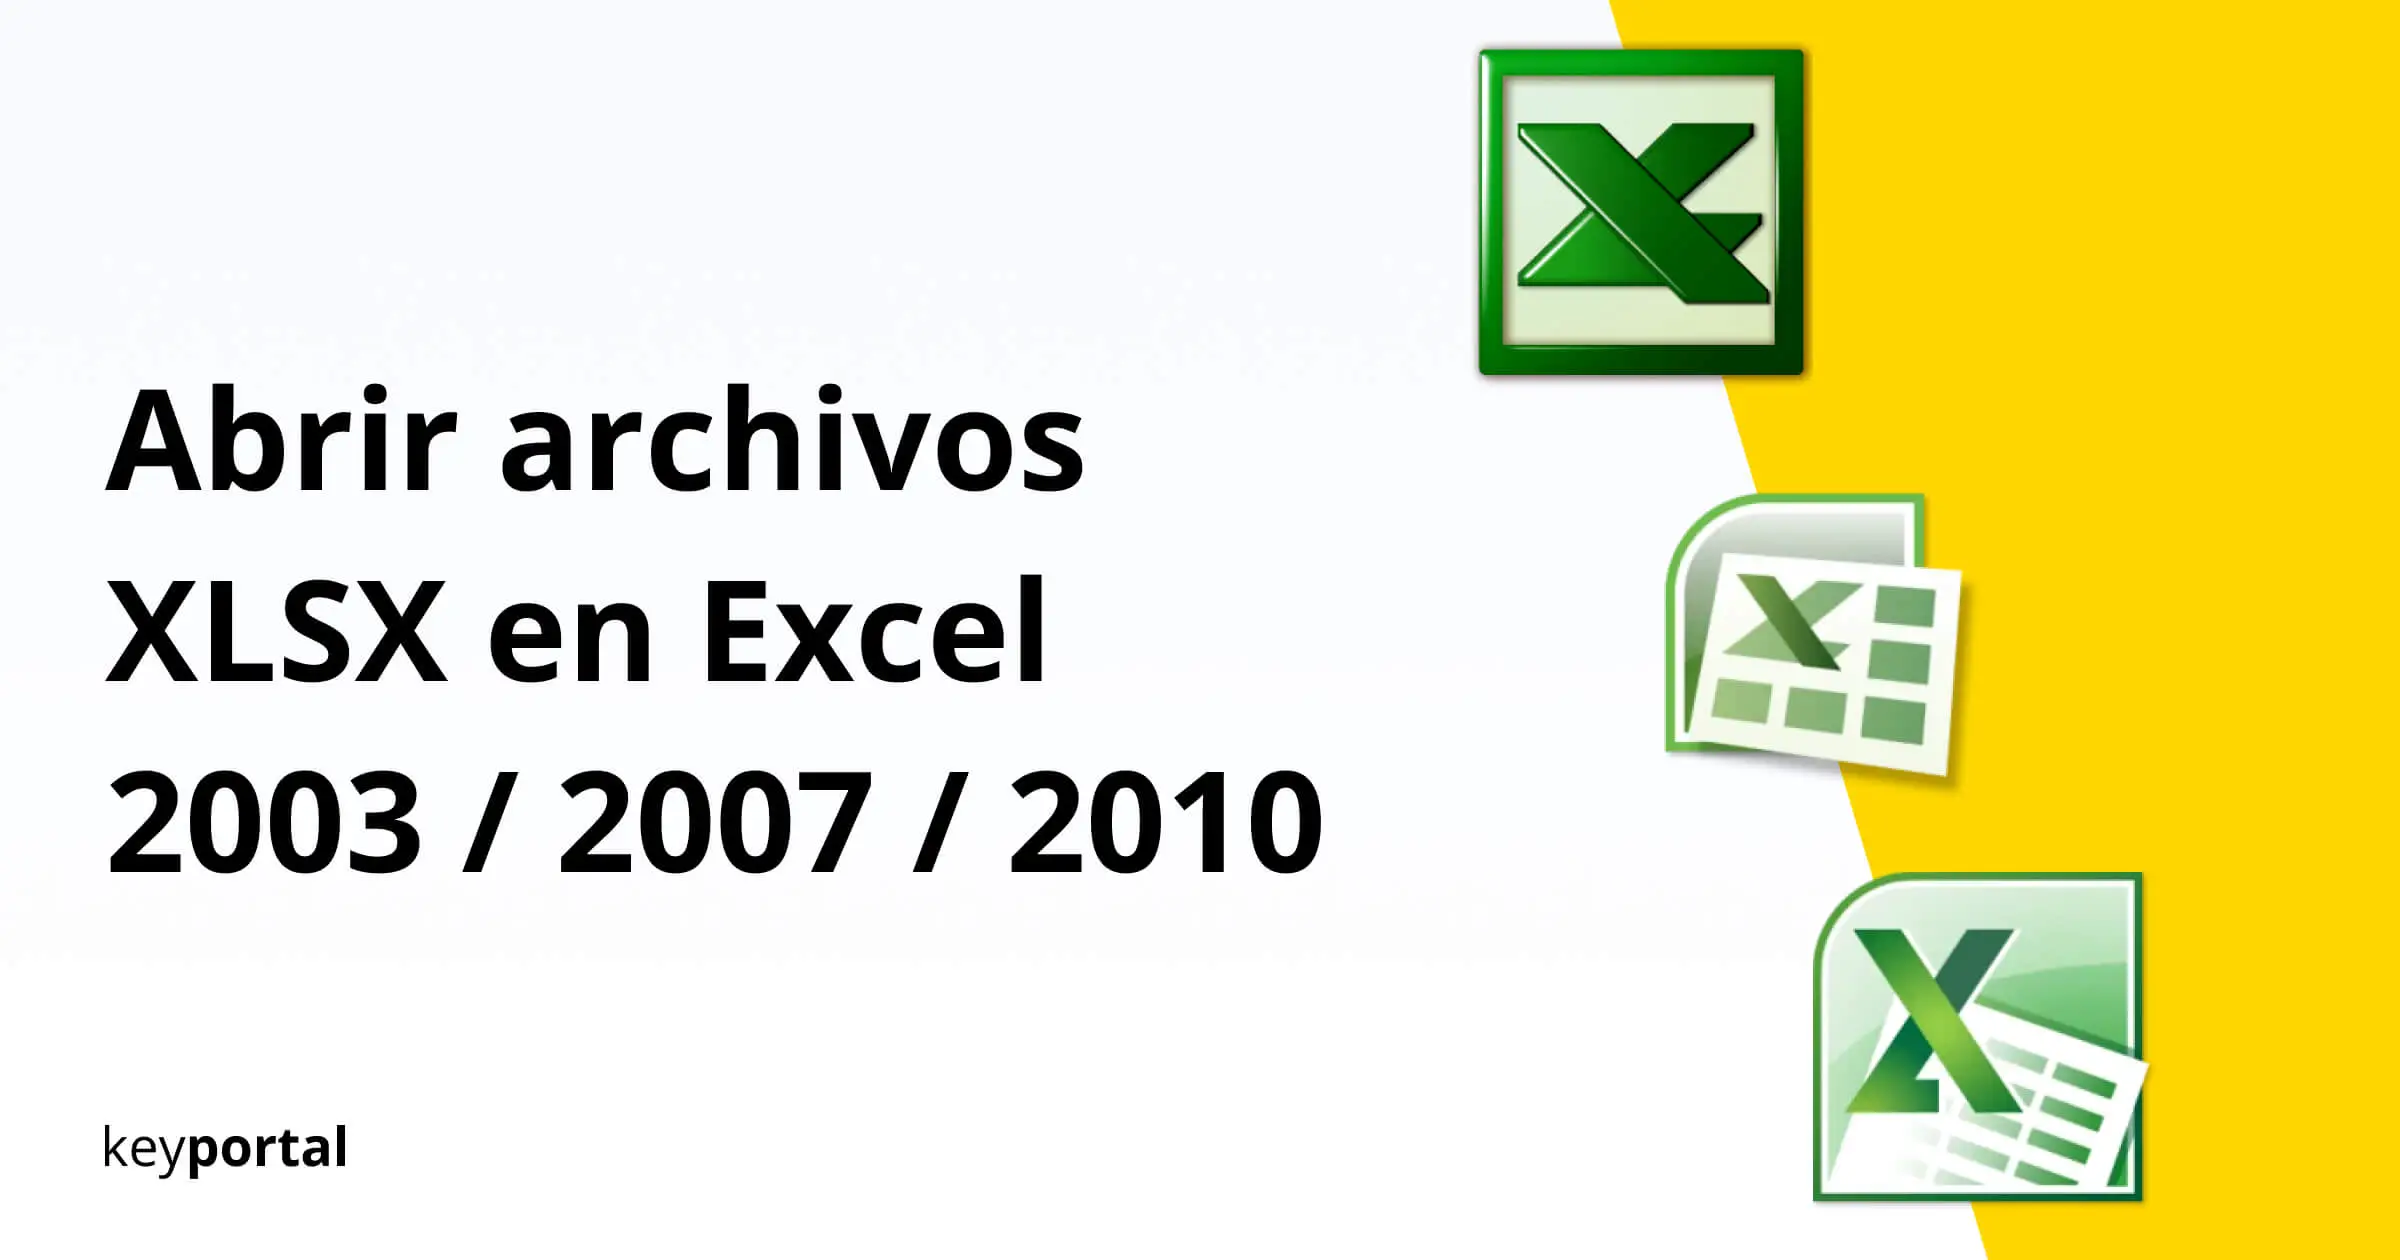 Abrir archivos XLSX en Excel 2003 / 2007 / 2010 